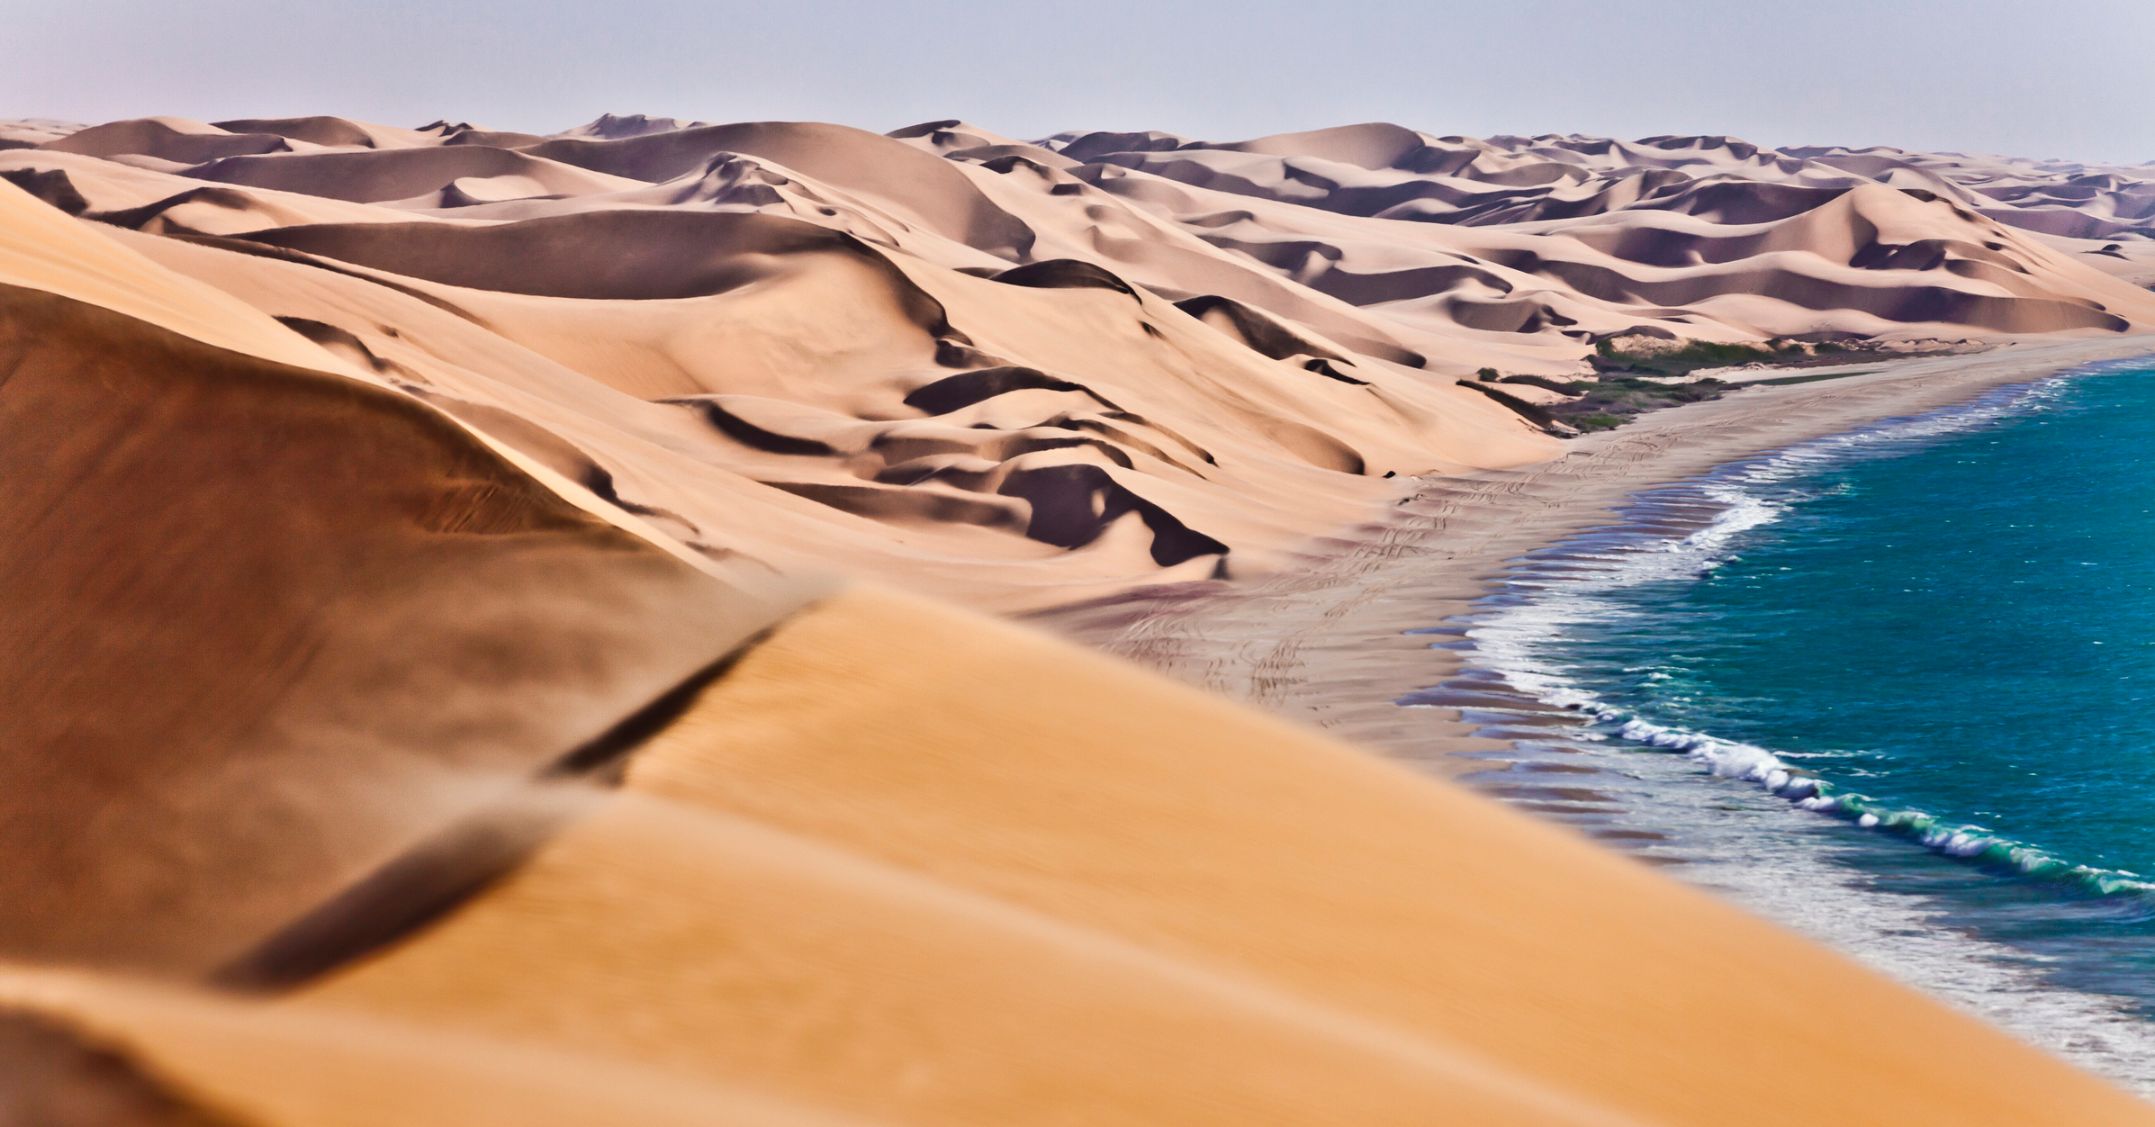 The stunning sand dunes of the Namib Desert